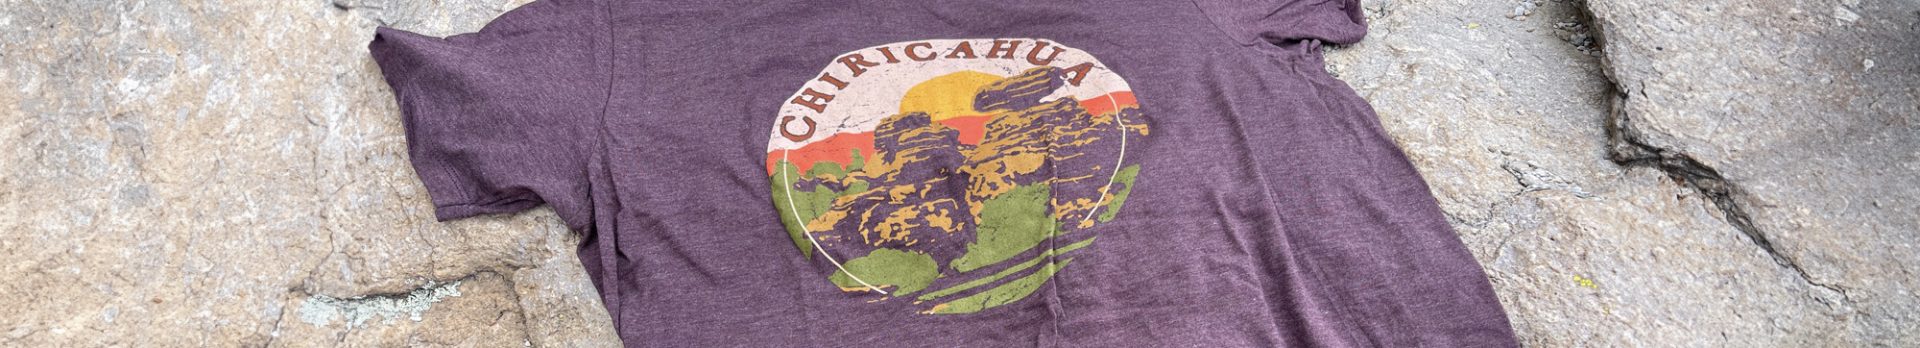 Chiricahua shirt on rock